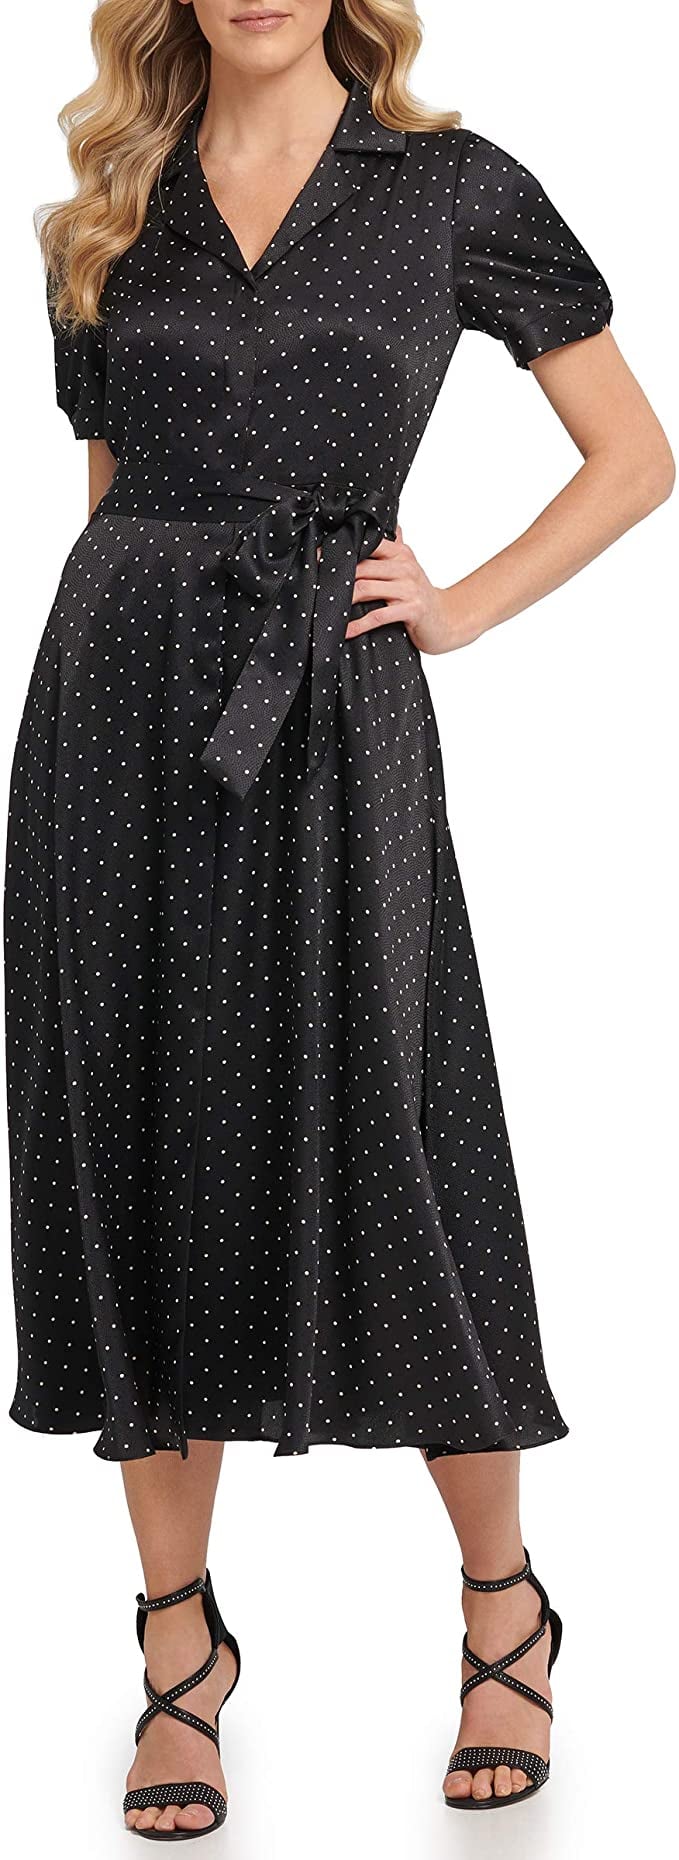 For a Dressy Polka Dot Moment: DKNY Knot Sleeve Midi Shirt Dress